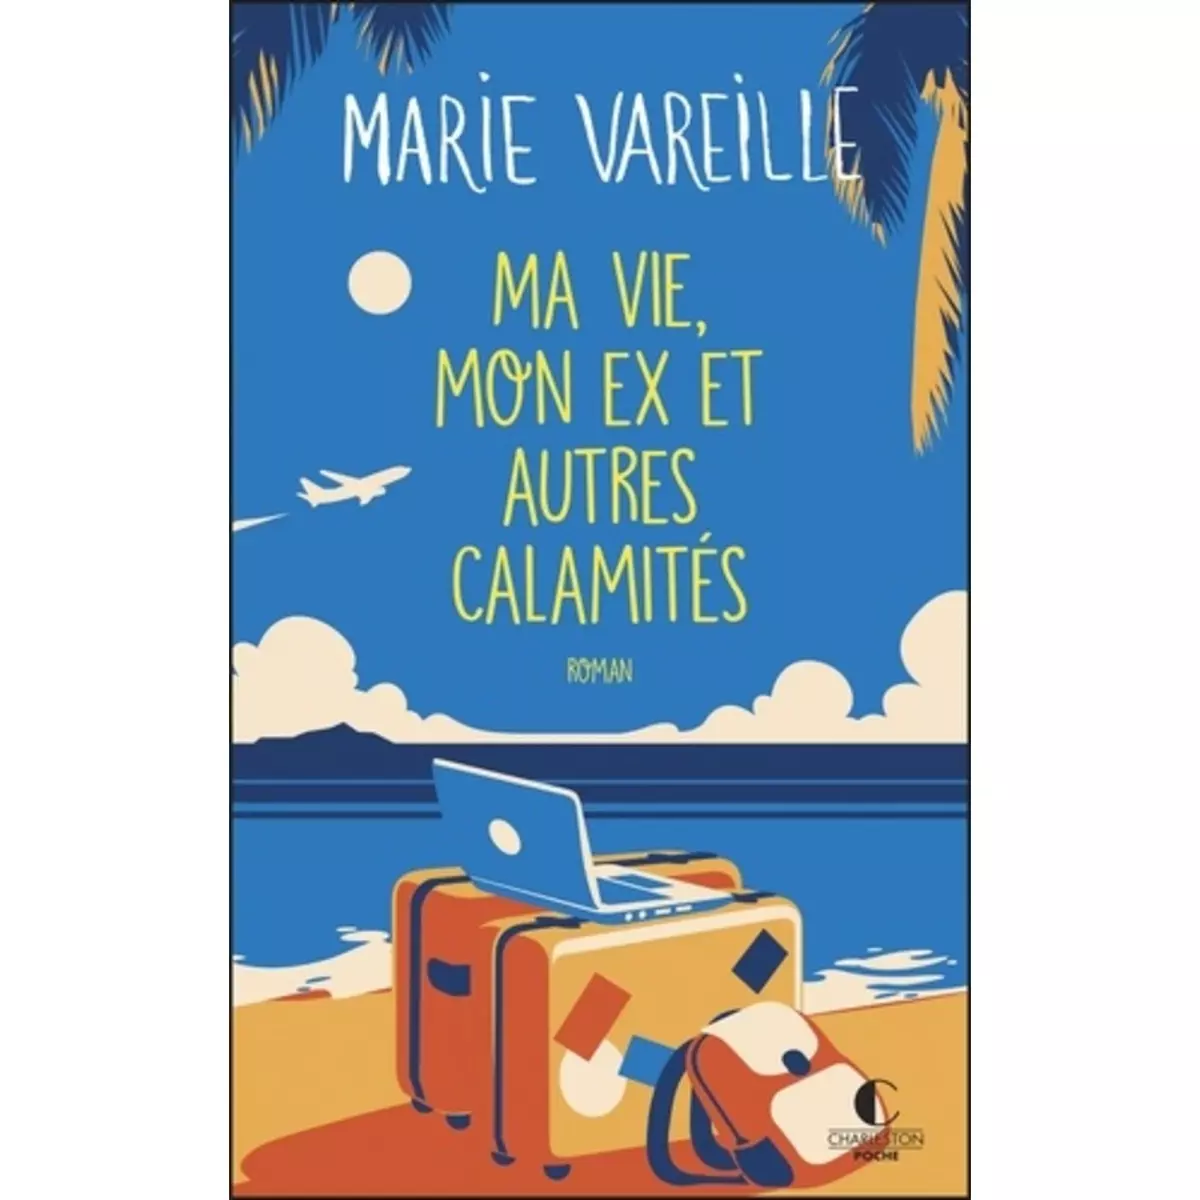  MA VIE, MON EX ET AUTRES CALAMITES, Vareille Marie